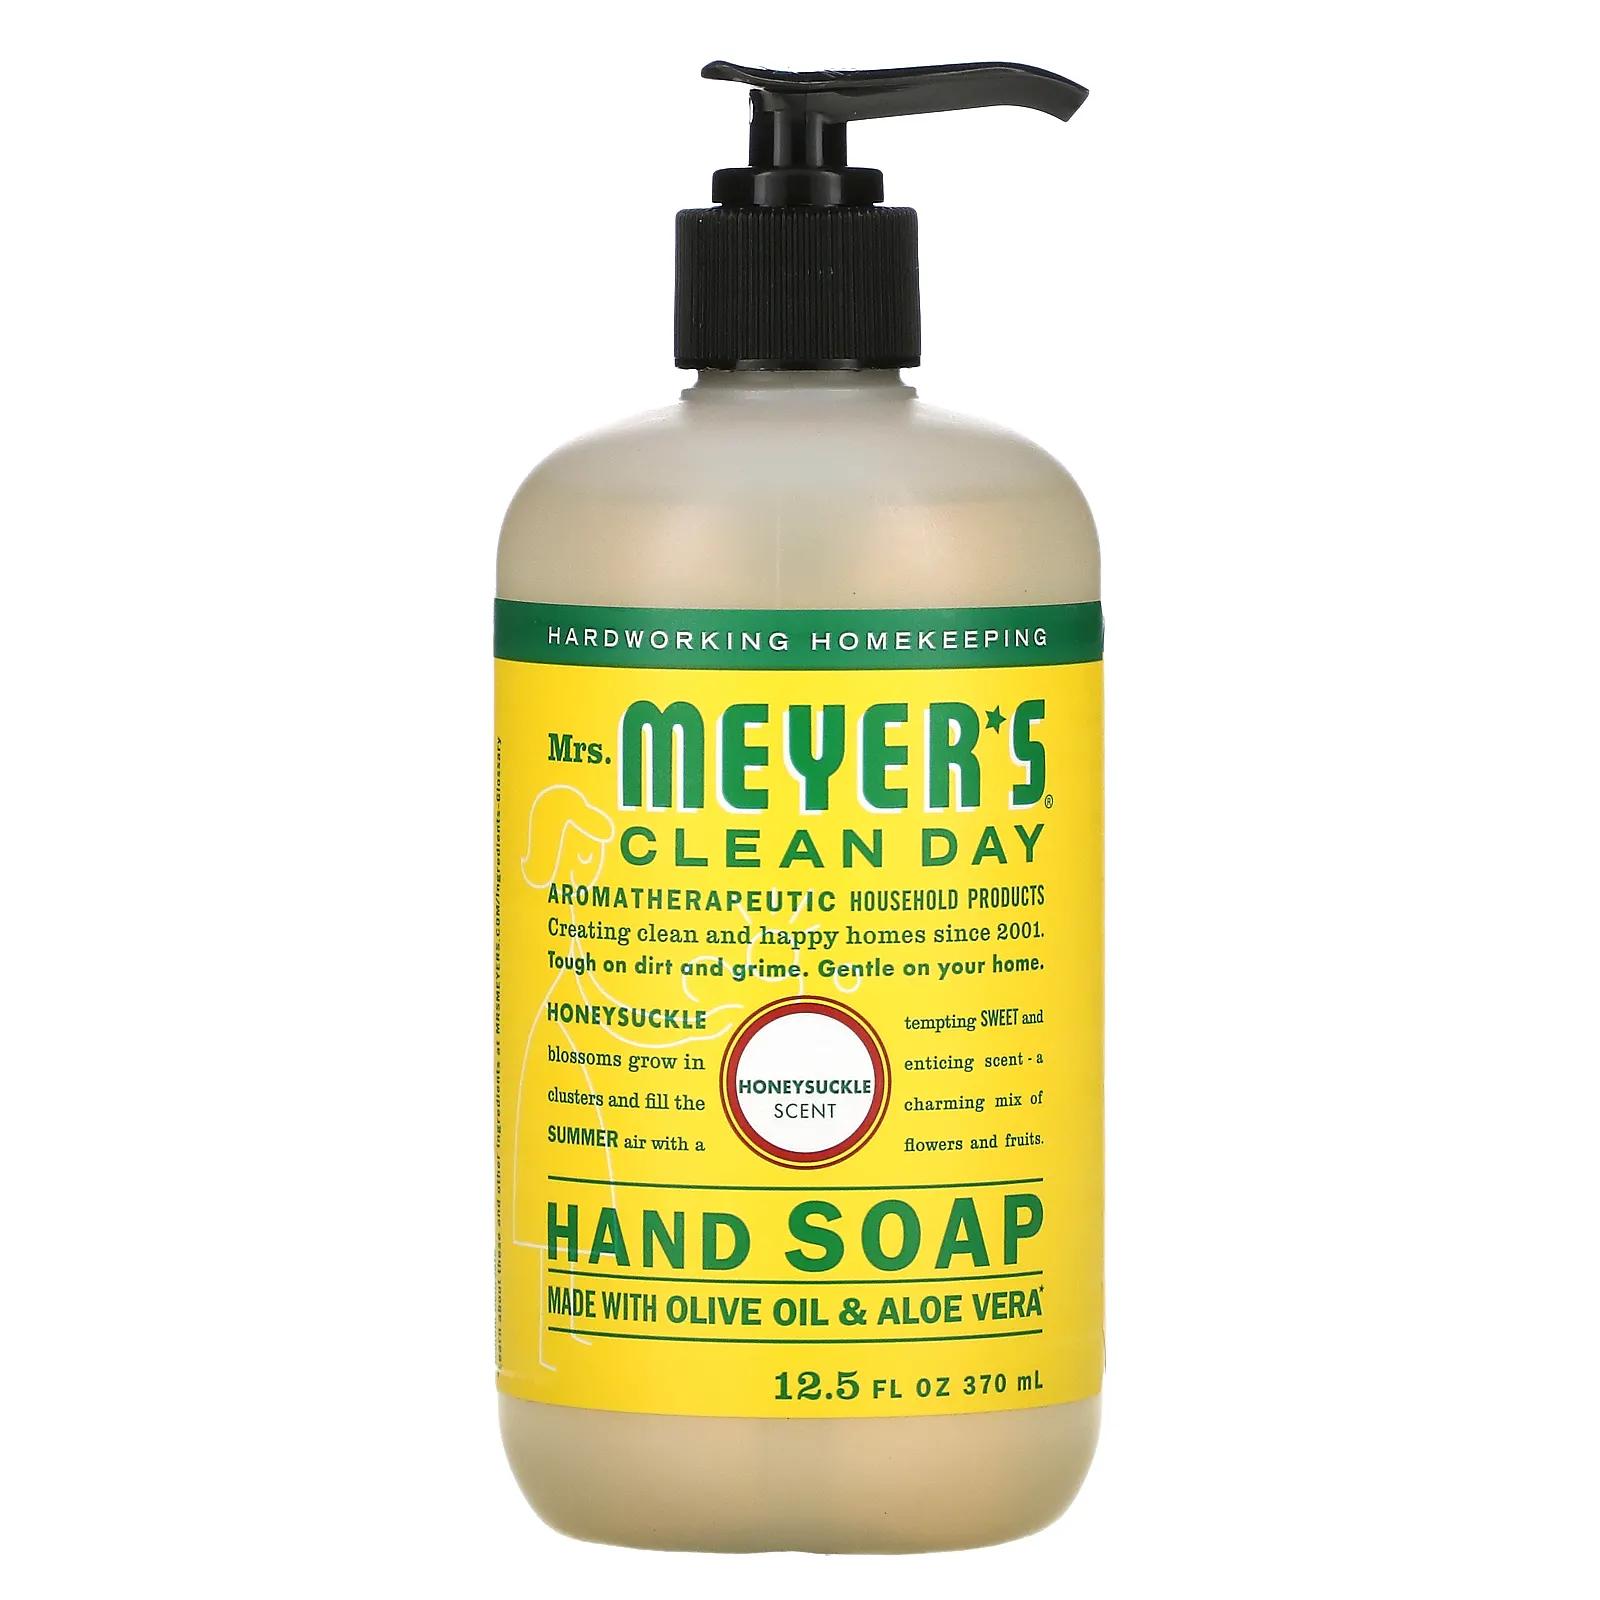 Mrs. Meyers Clean Day Hand Soap Honeysuckle Scent 12.5 fl oz (370 ml)